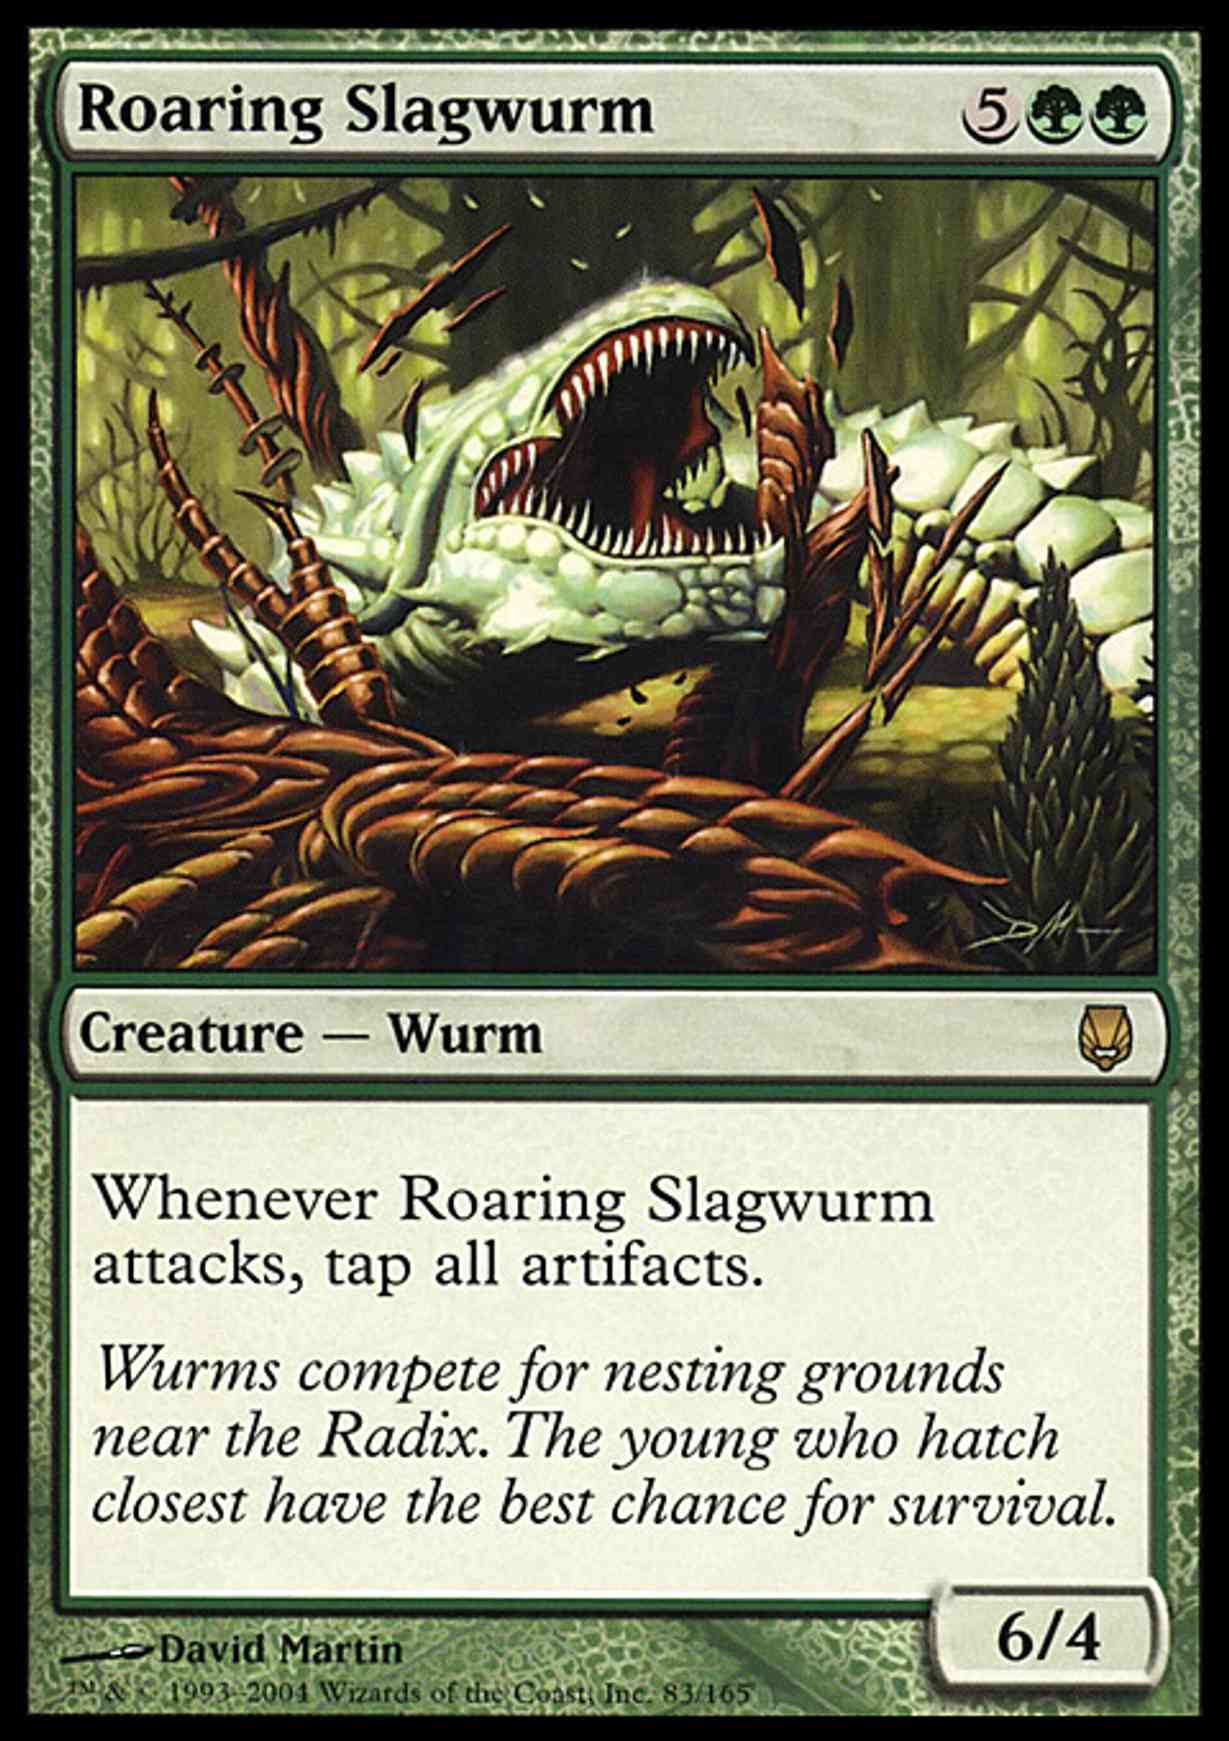 Roaring Slagwurm magic card front